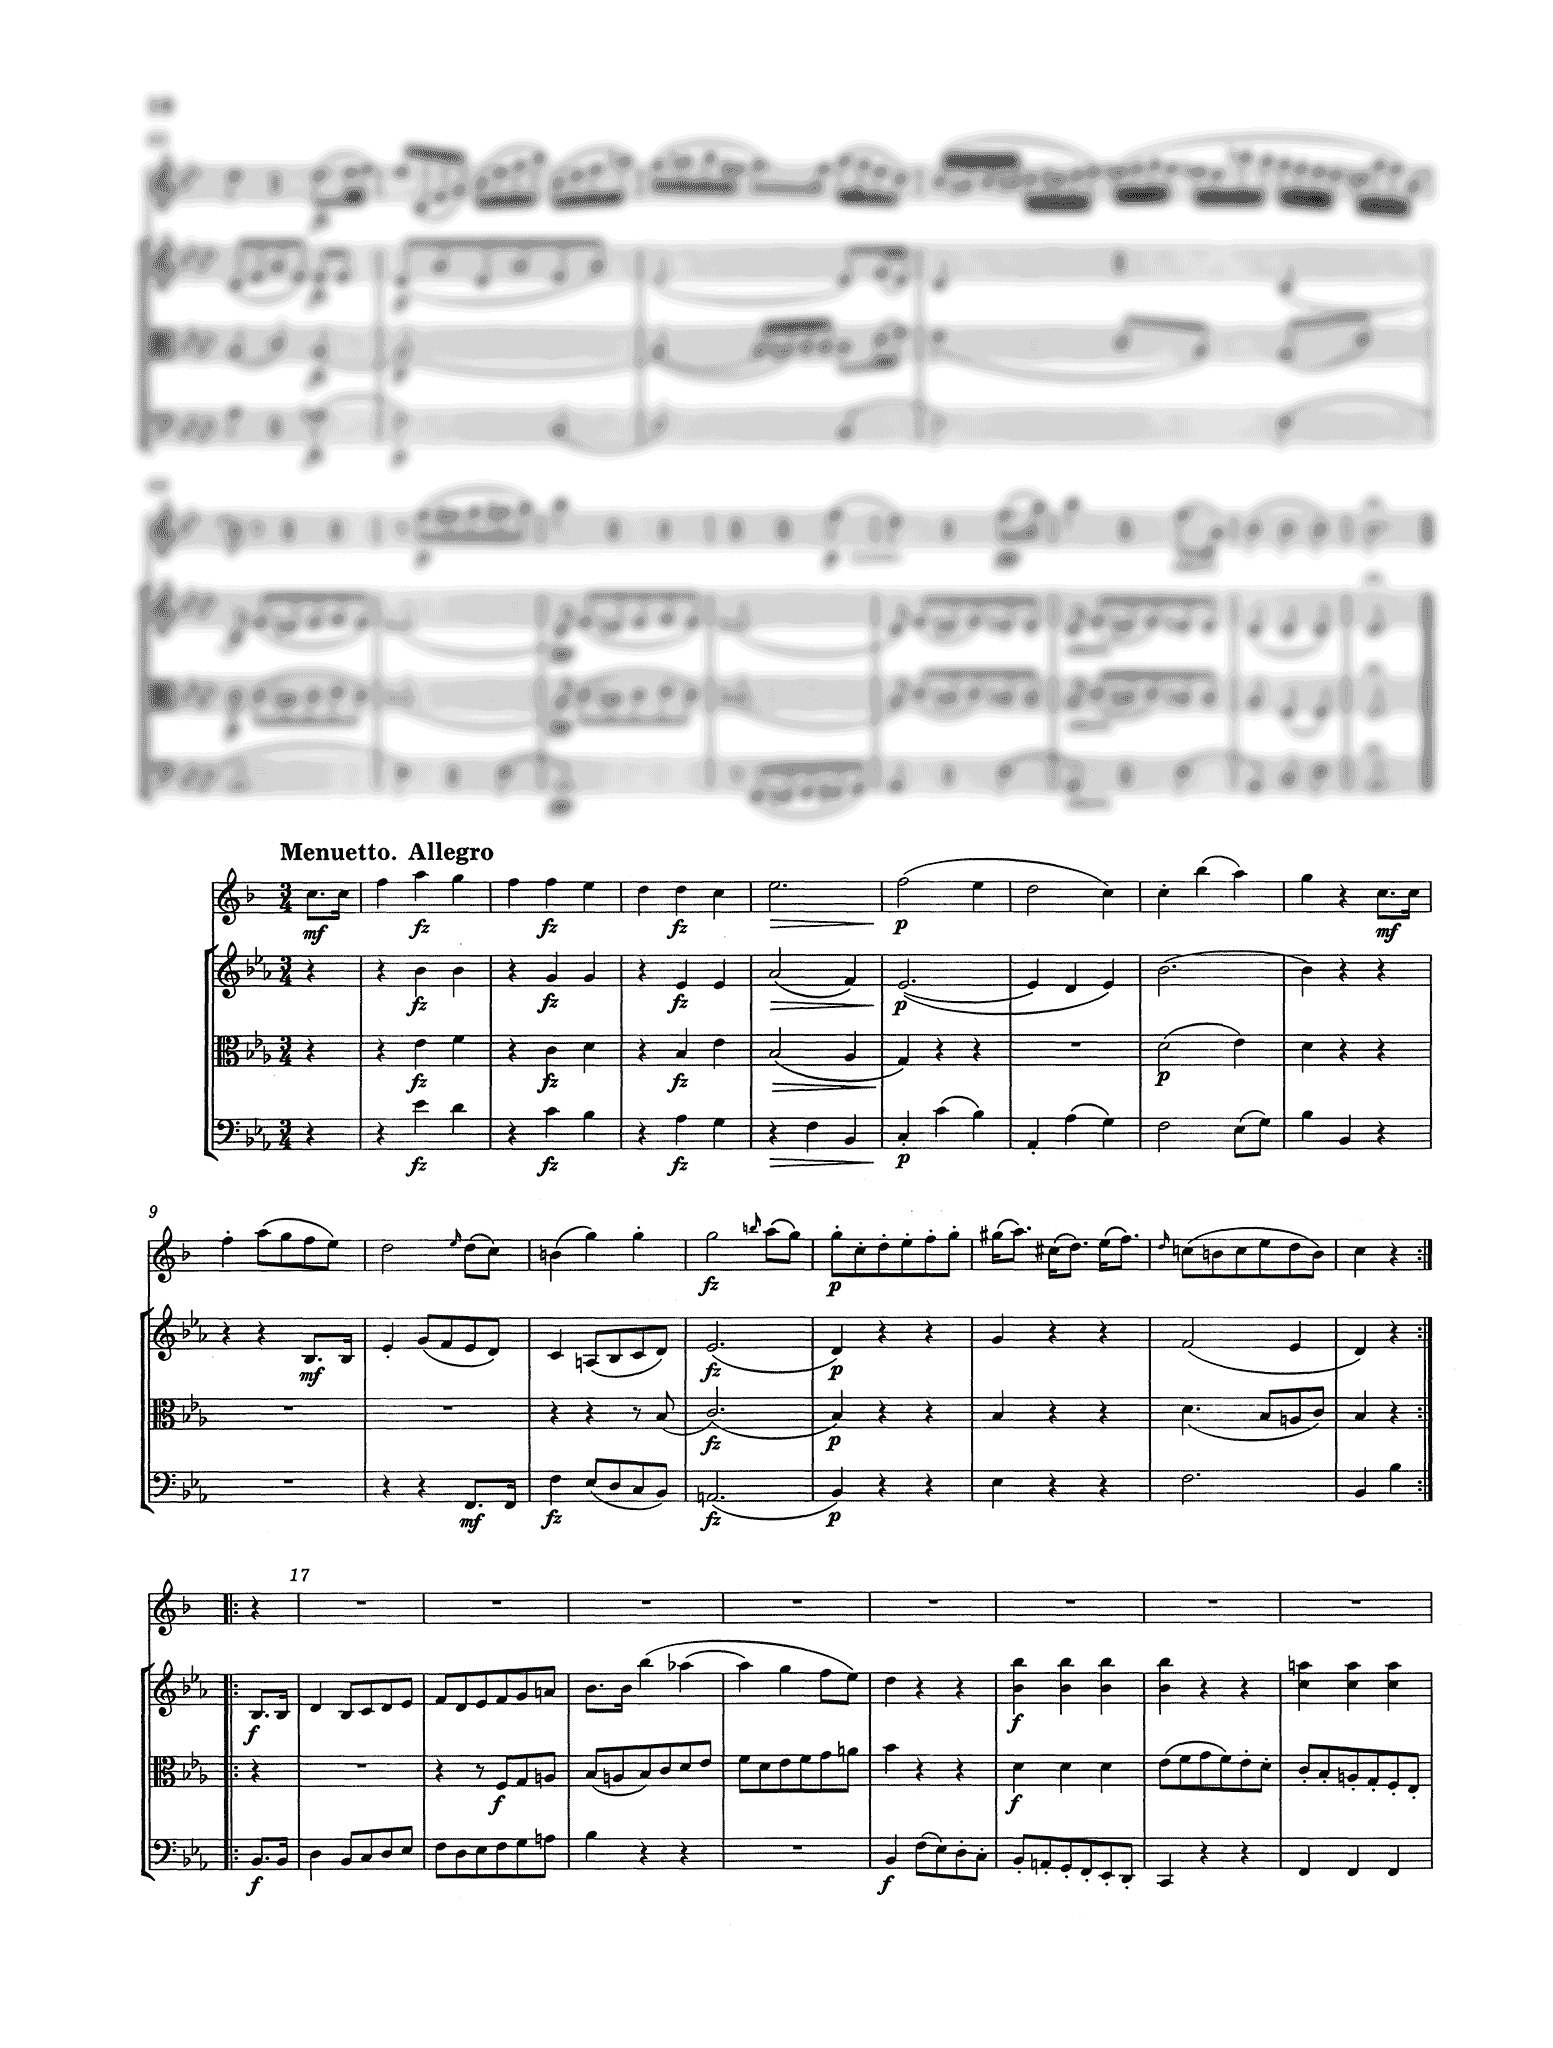 Crusell Clarinet Quartet No. 1 in E-flat Major, Op. 2 - Movement 3